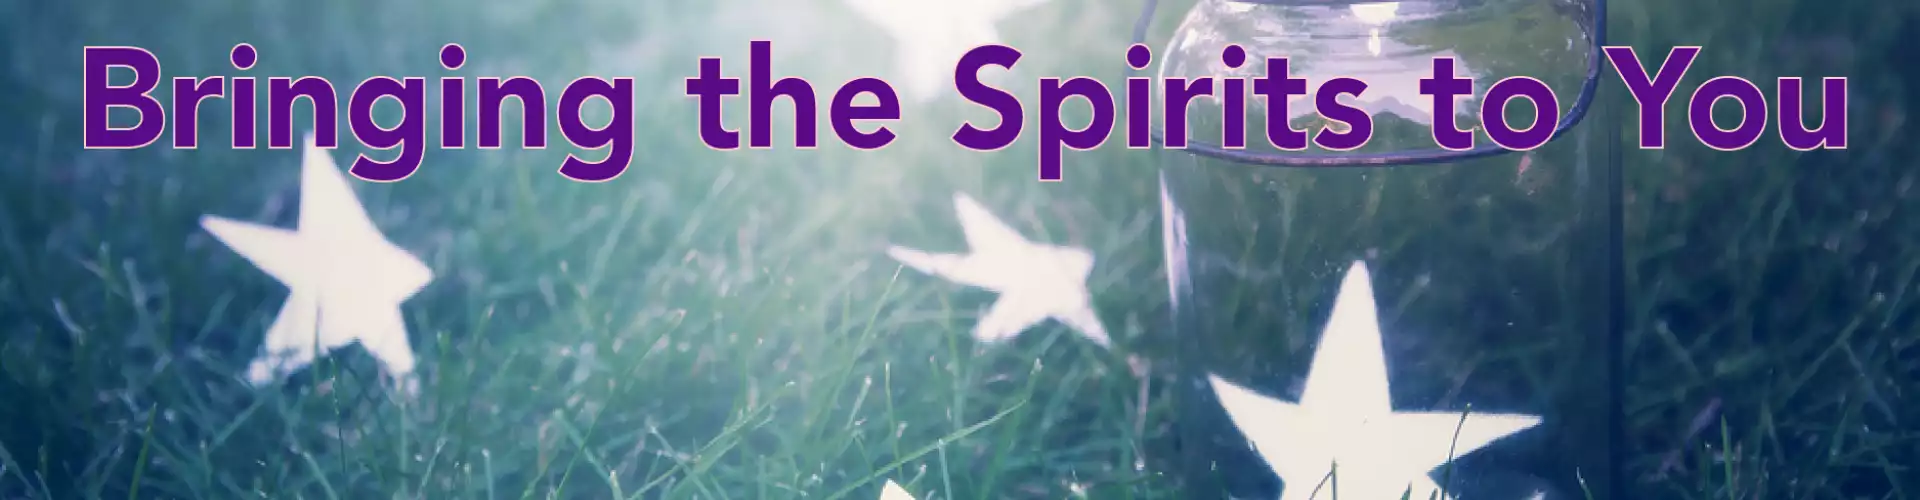 Life With Spirit Series - Bringing Spirits to You